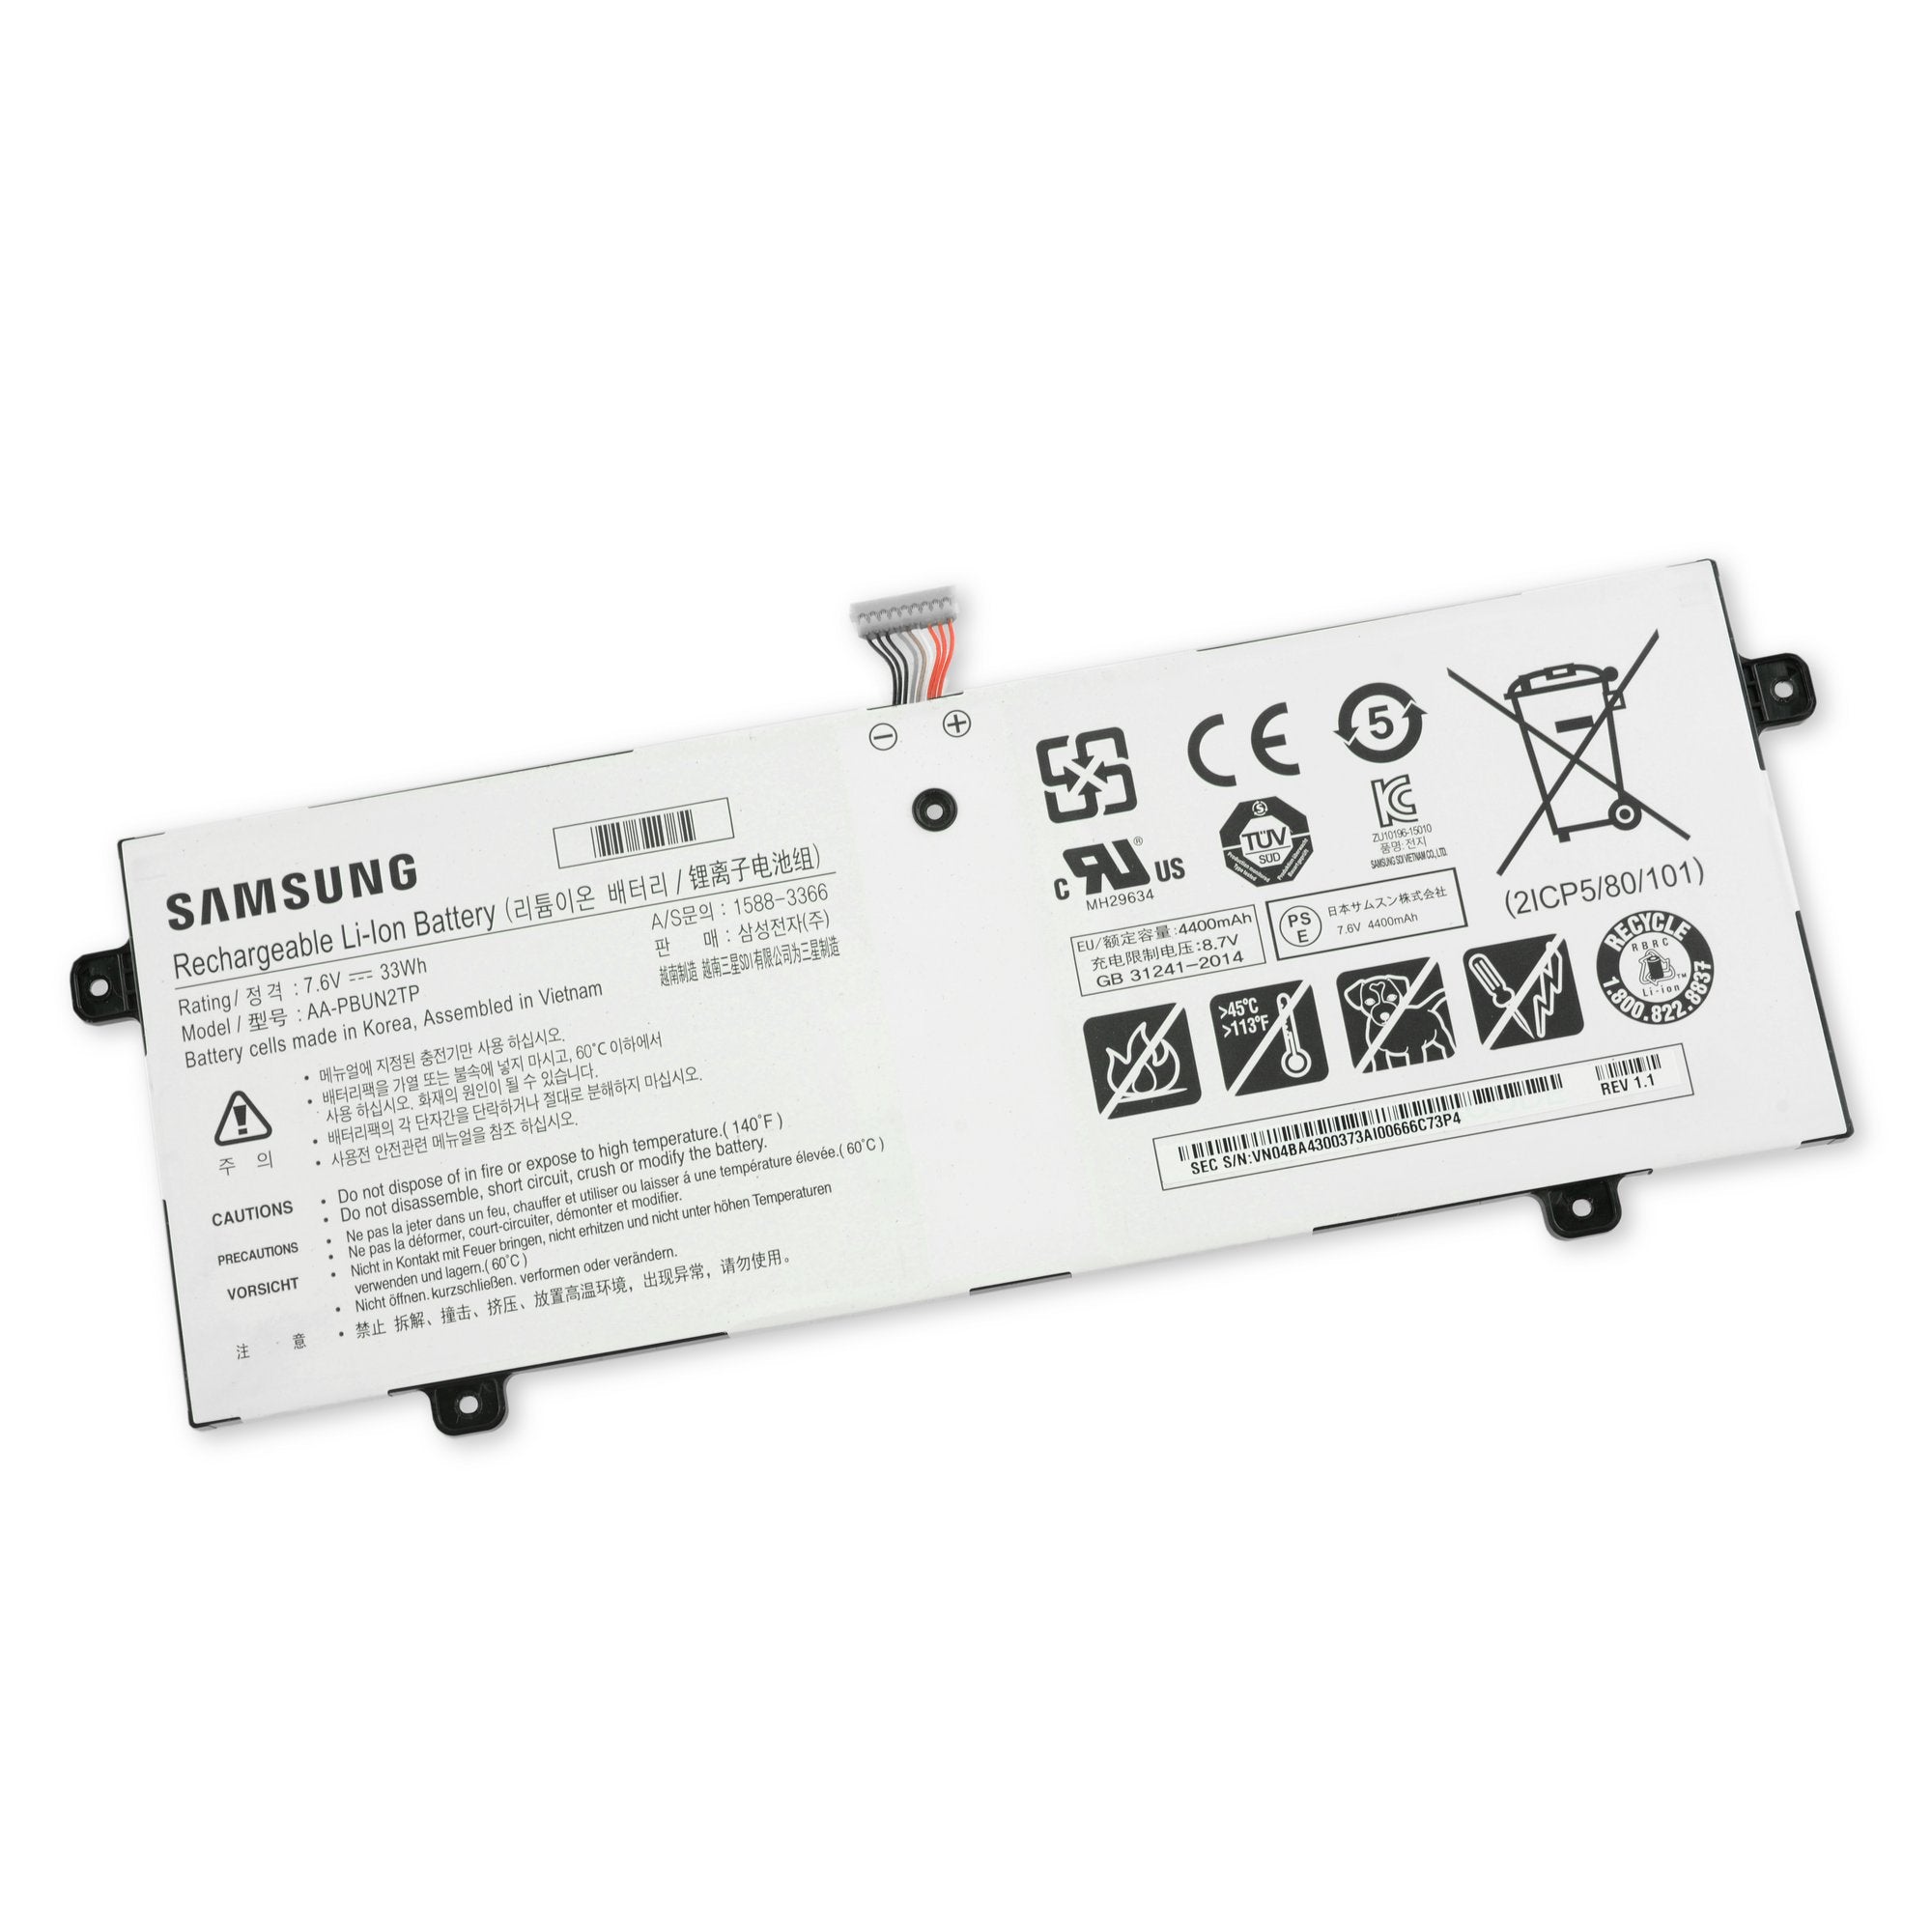 Samsung Chromebook XE500C13 Battery